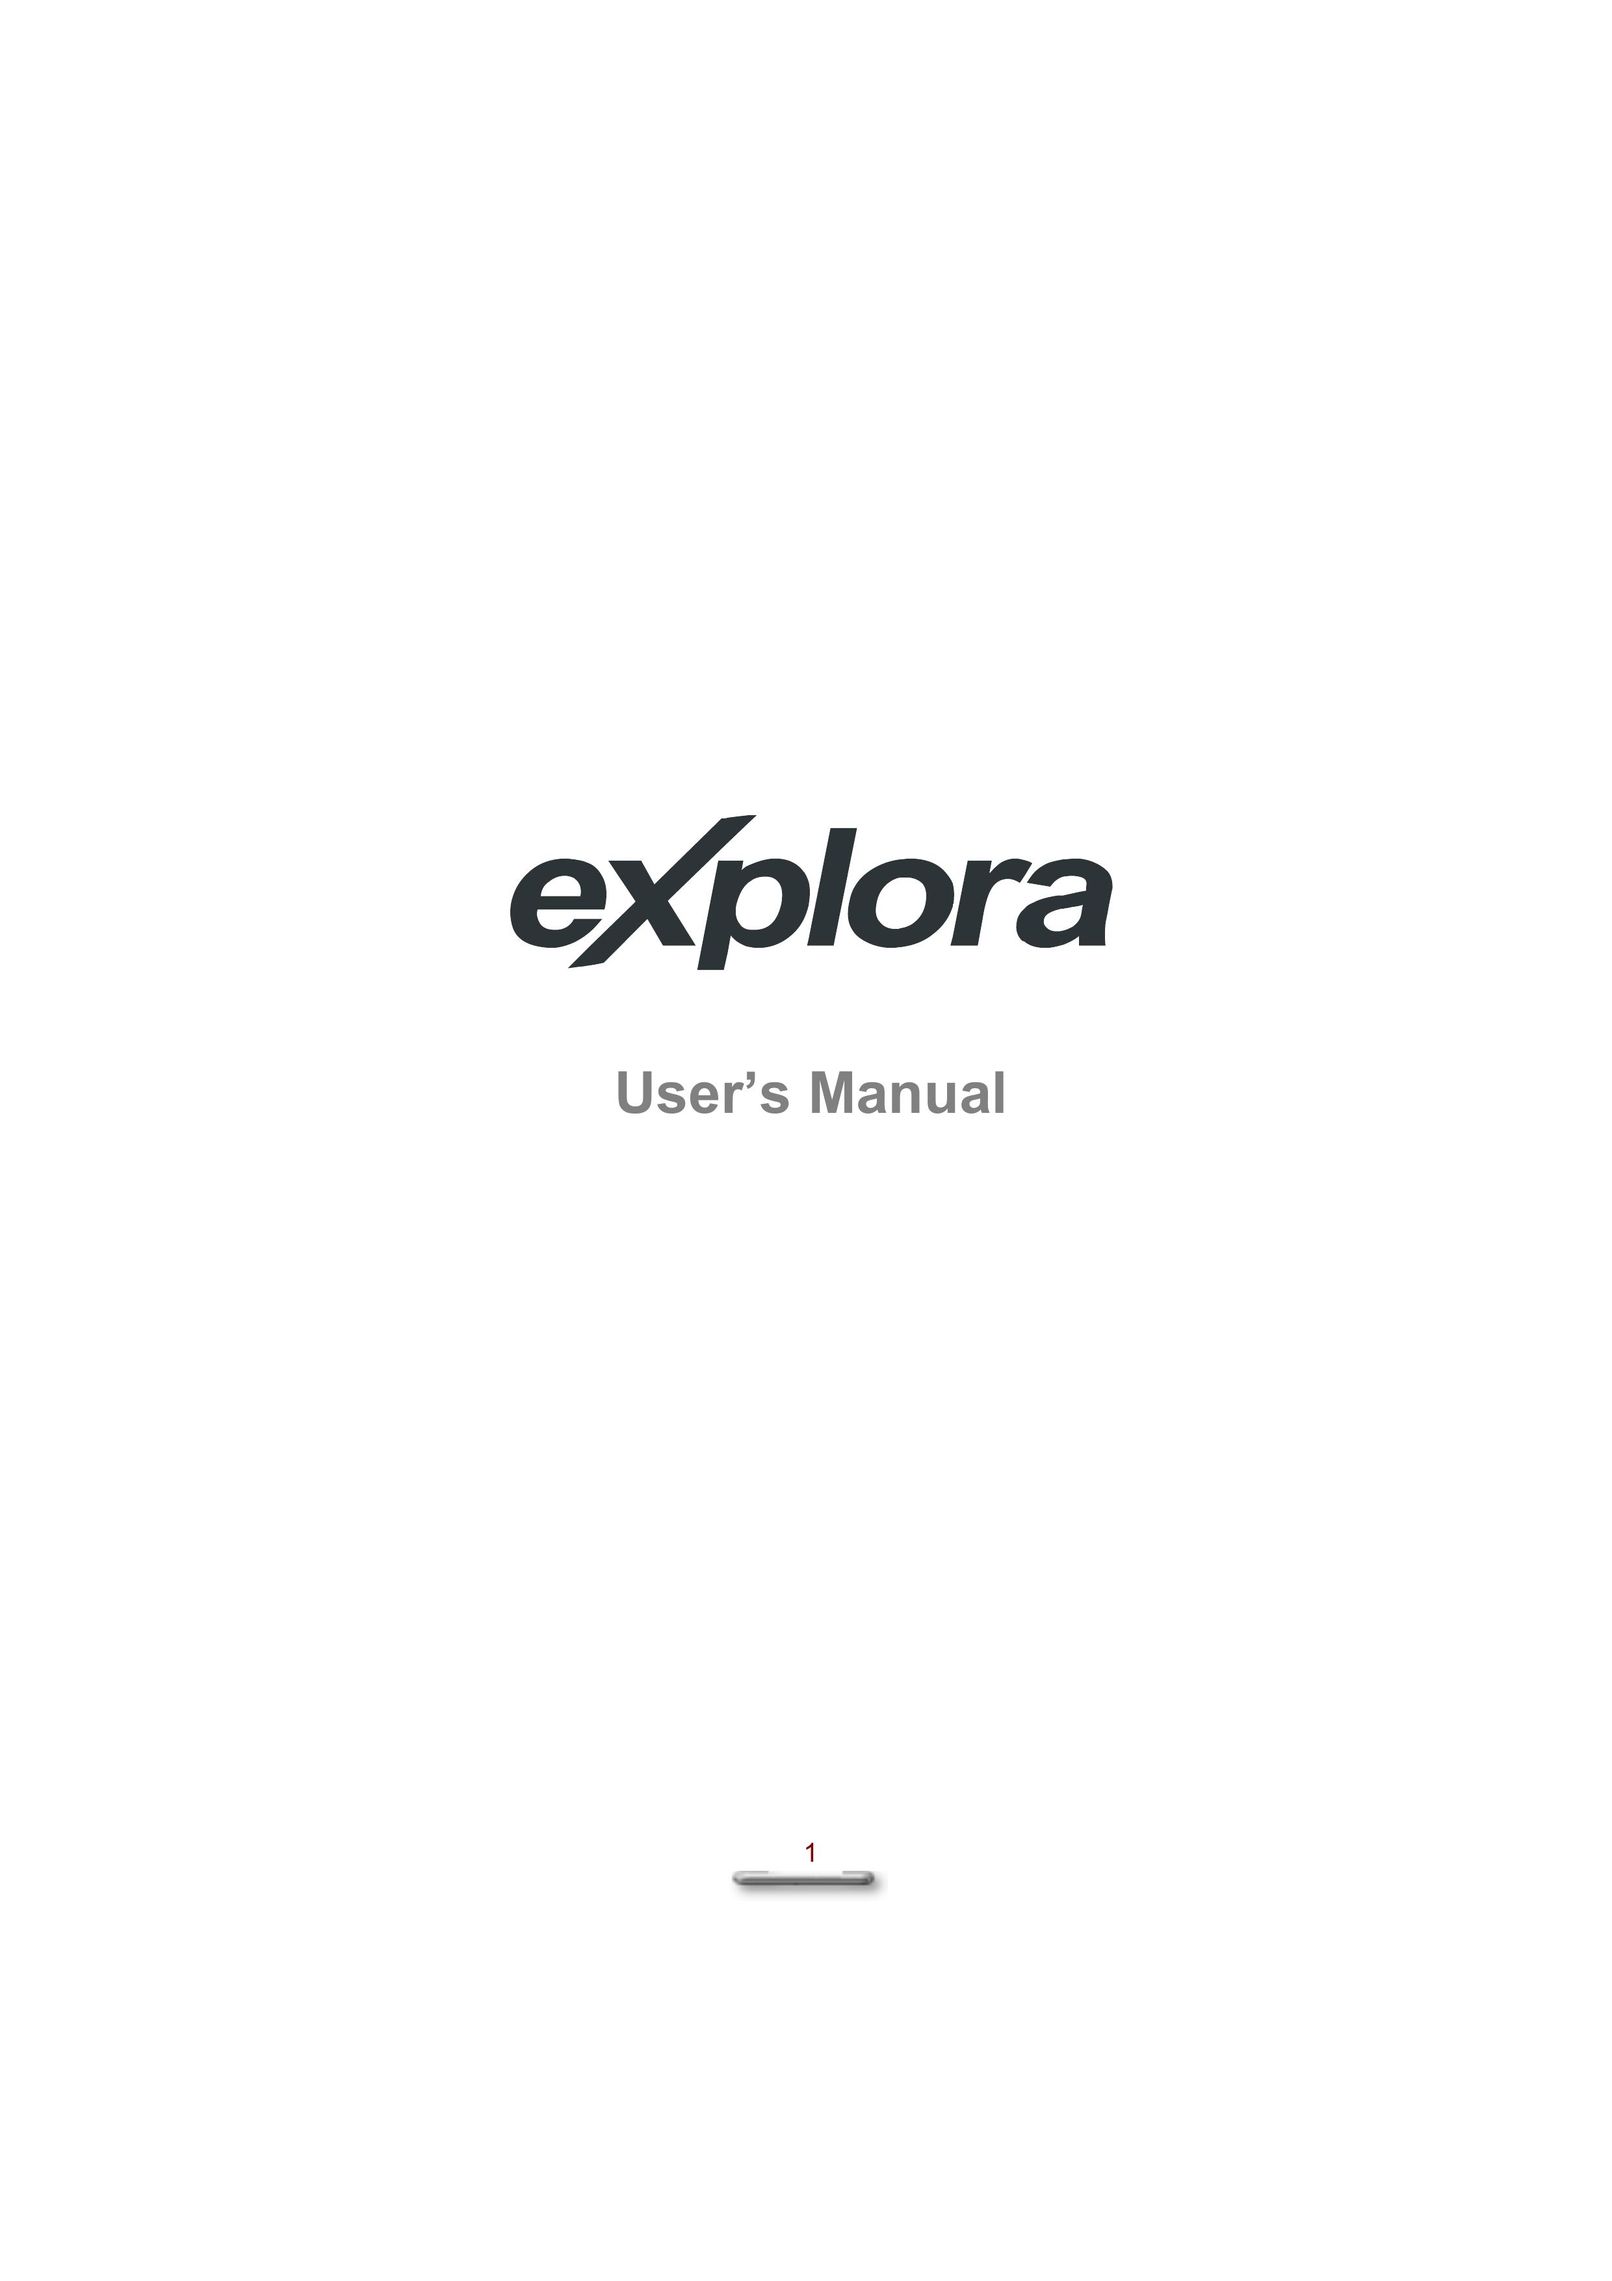 Everex eXplora Personal Computer User Manual